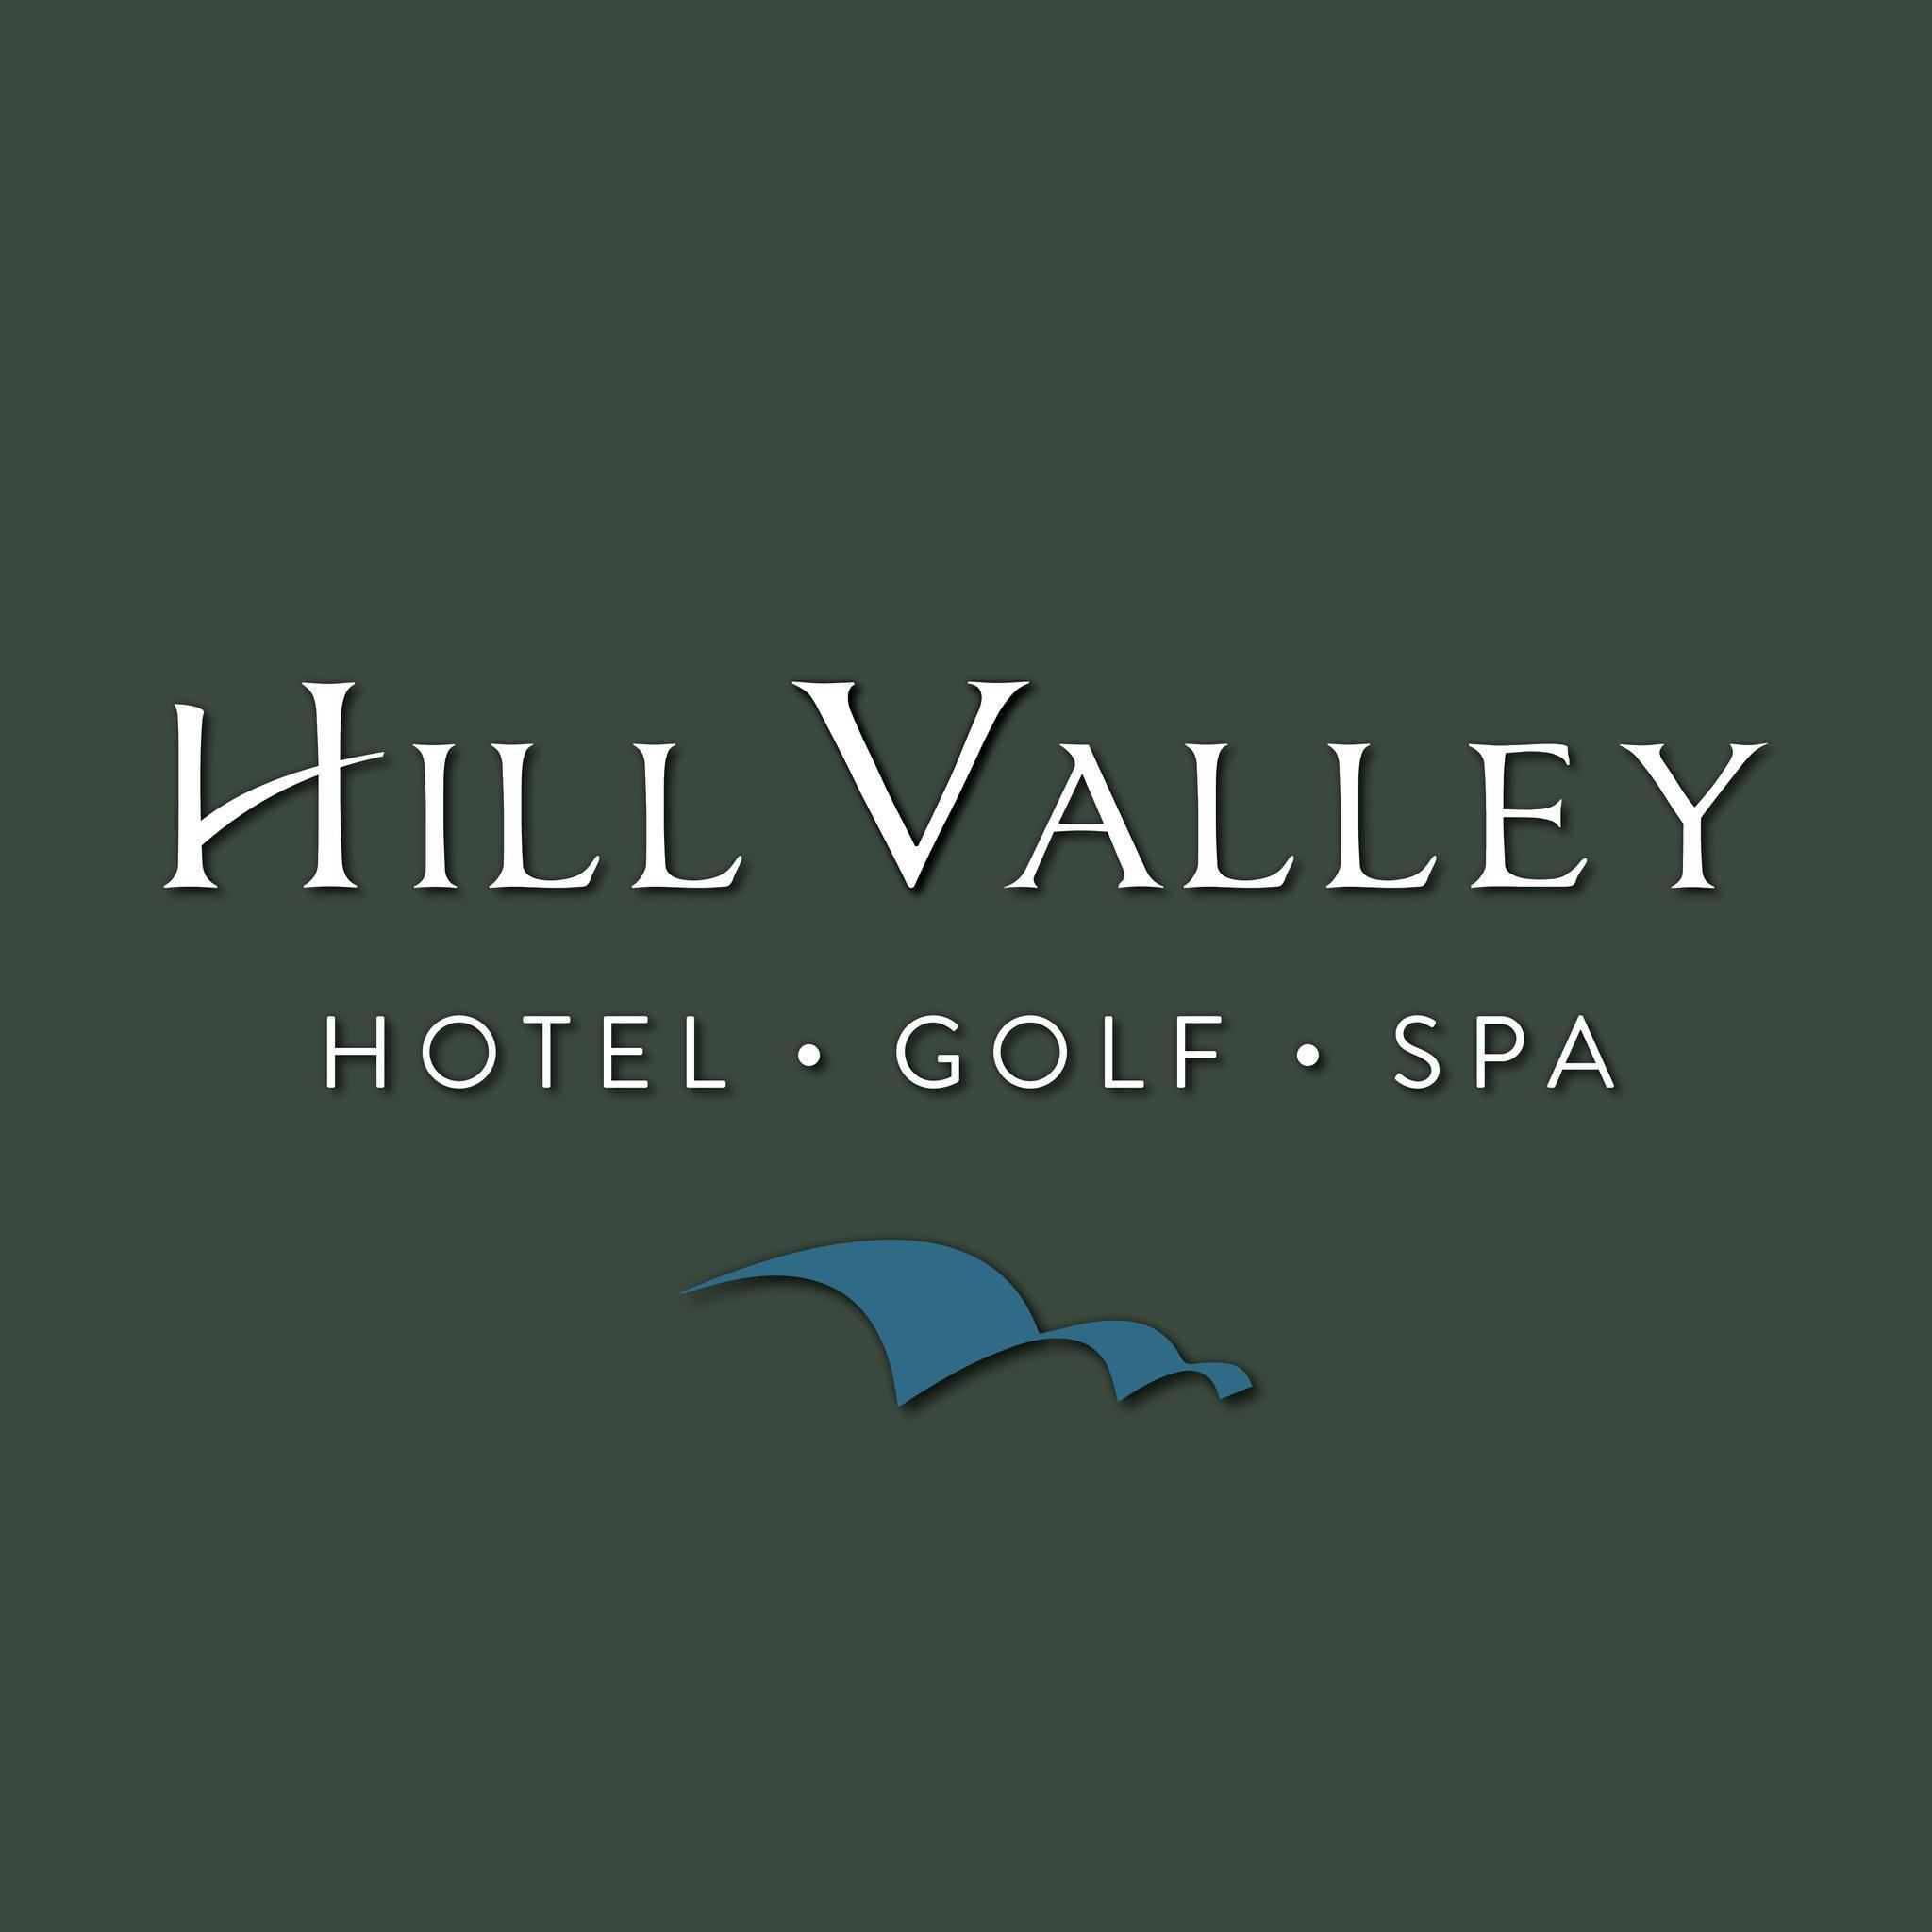 Macdonald Hill Valley Hotel, Golf & Spa Logo